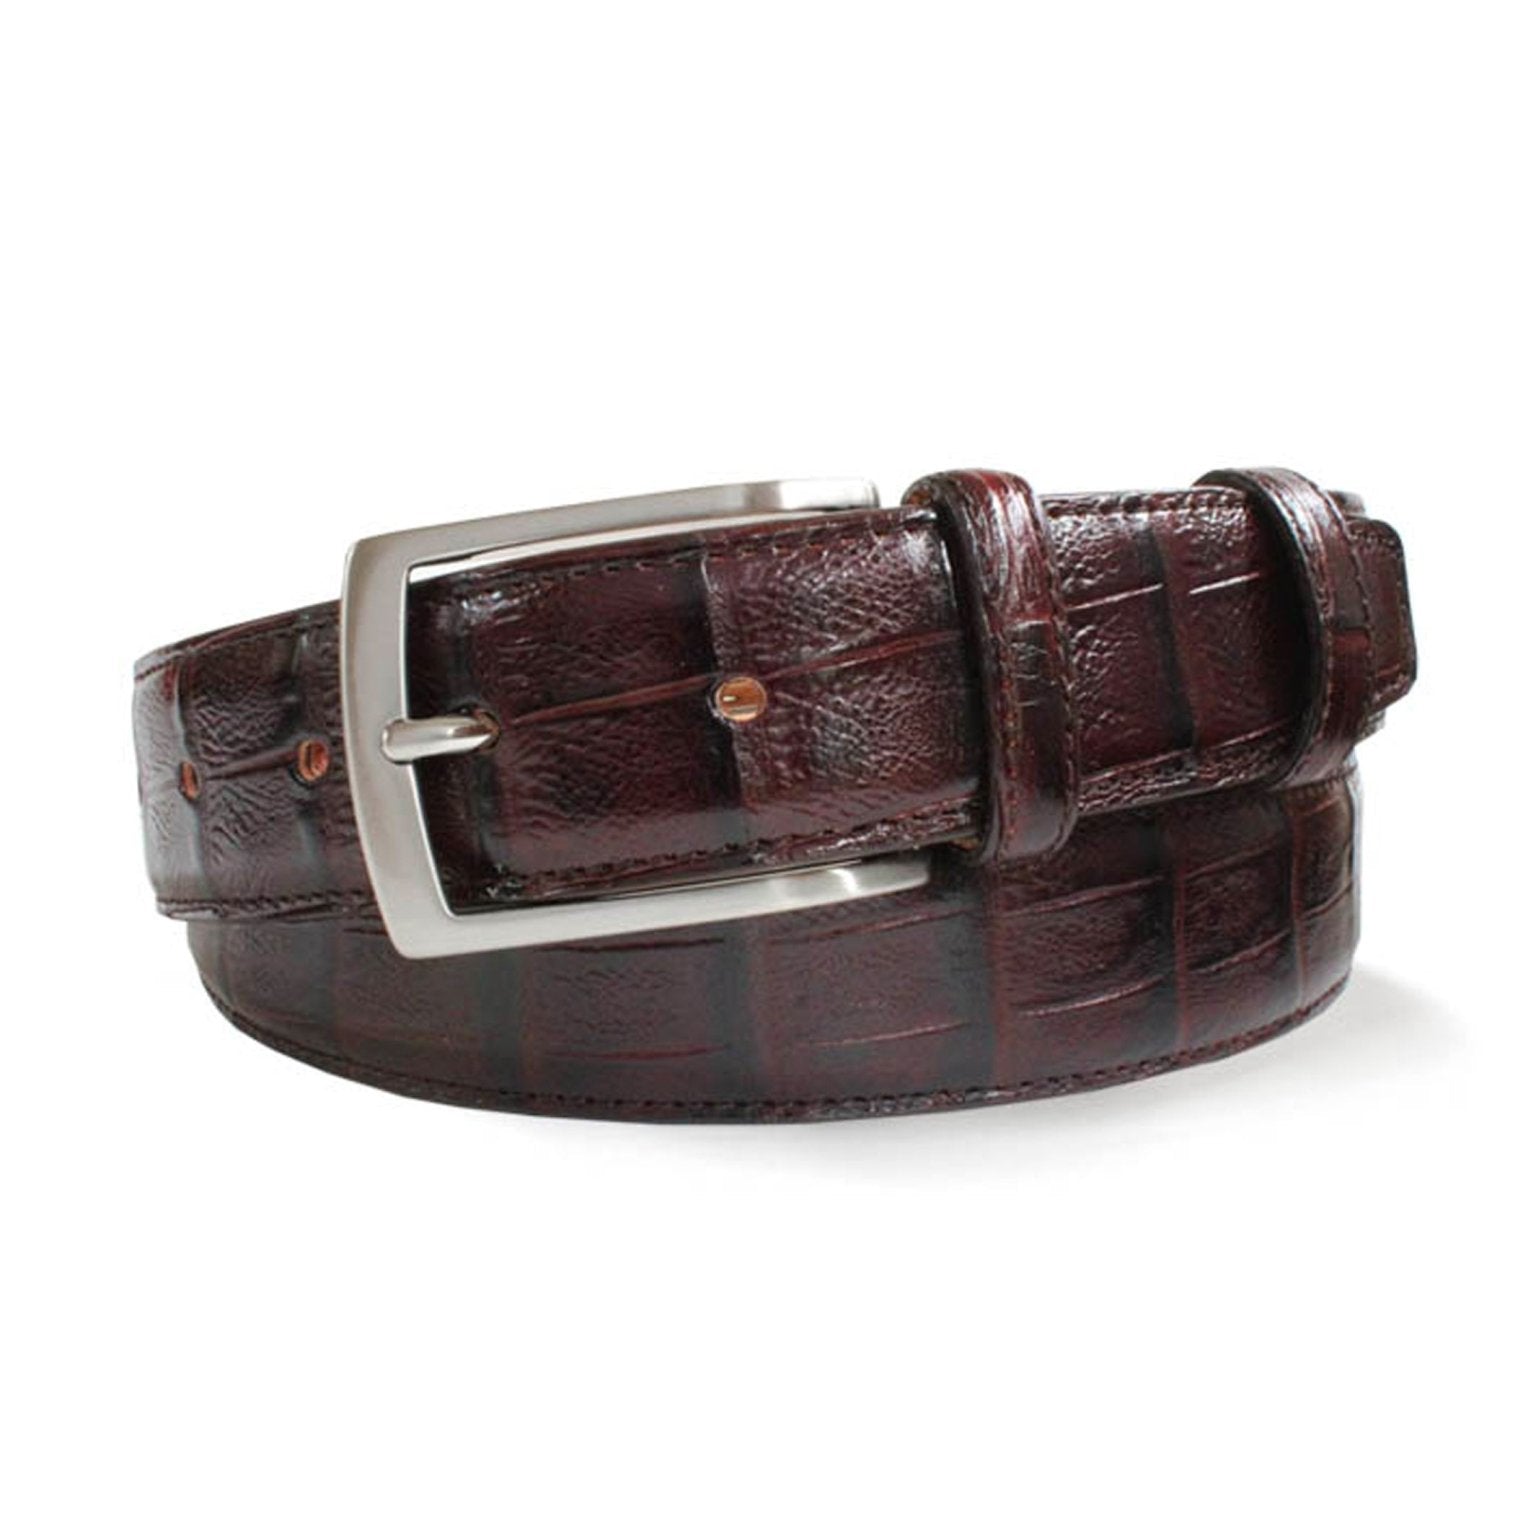 4elementsclothingRobert CharlesRobert Charles Belts - 1502 Crocodile print Leather Mens Belt - Made in Italy - 100% Leather - 35mmBelts1502/Brown/S